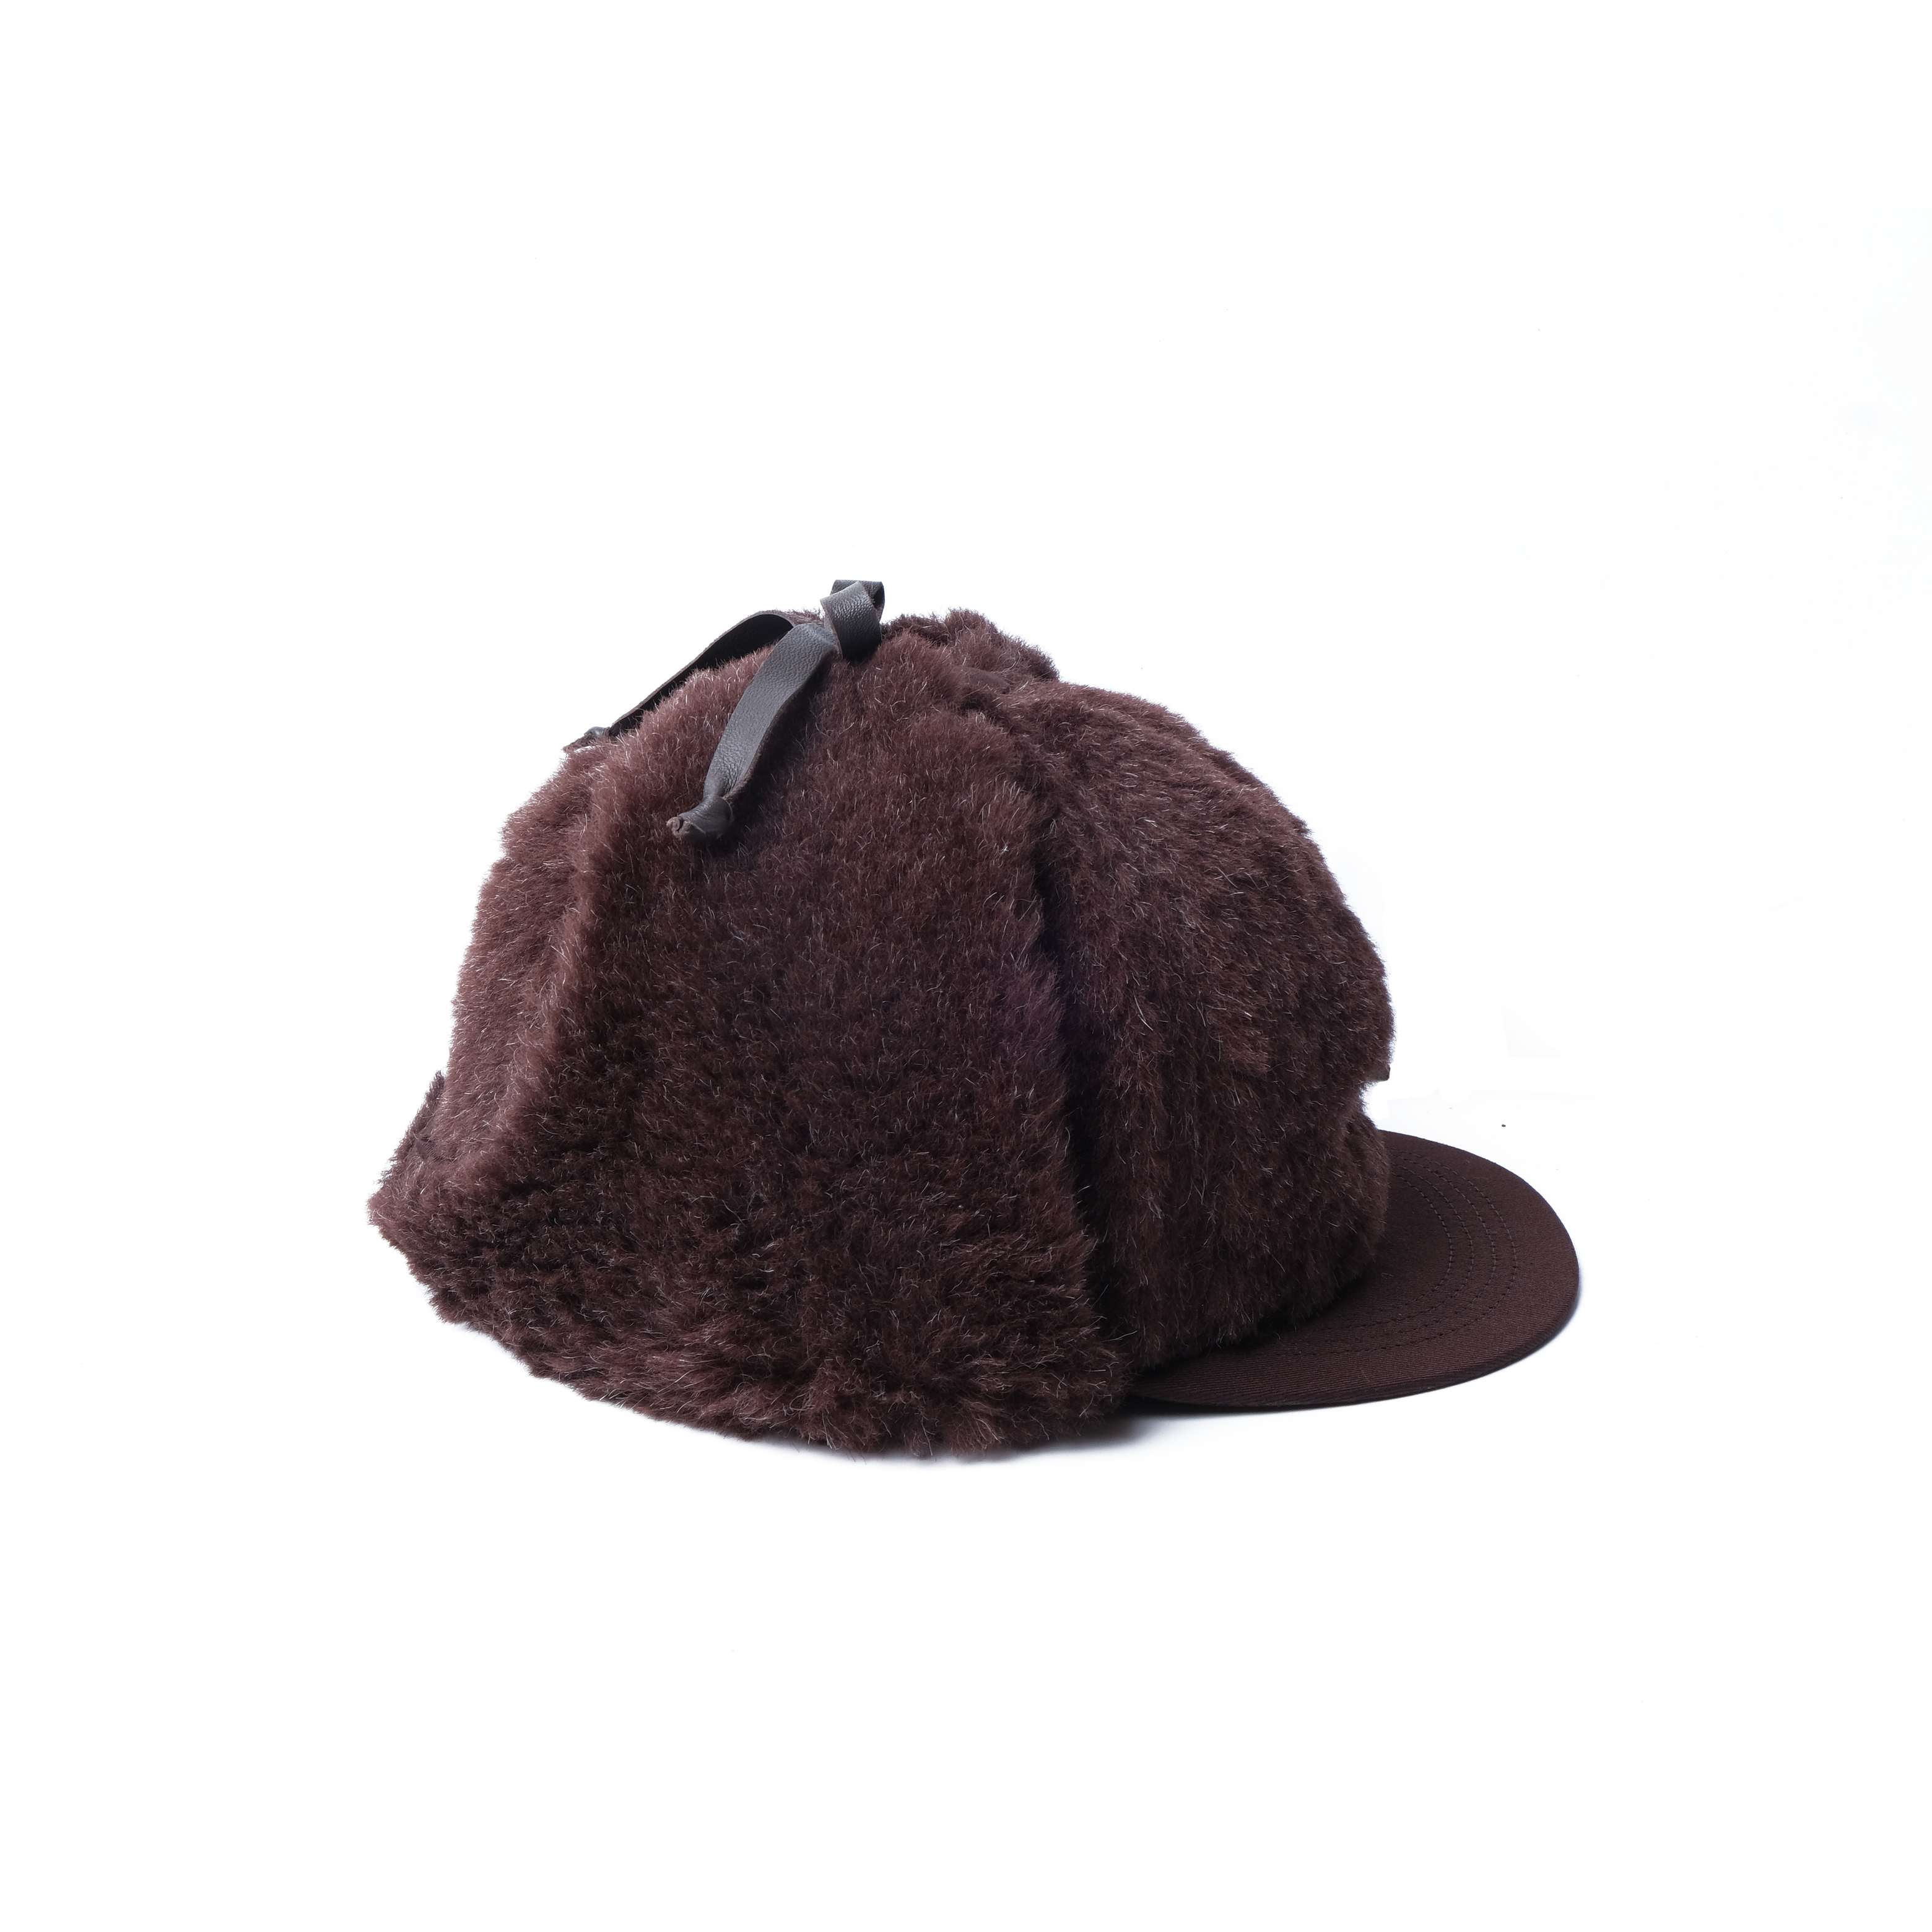 Alpaca Trapper Cap - Limited Edition - Dark Brown